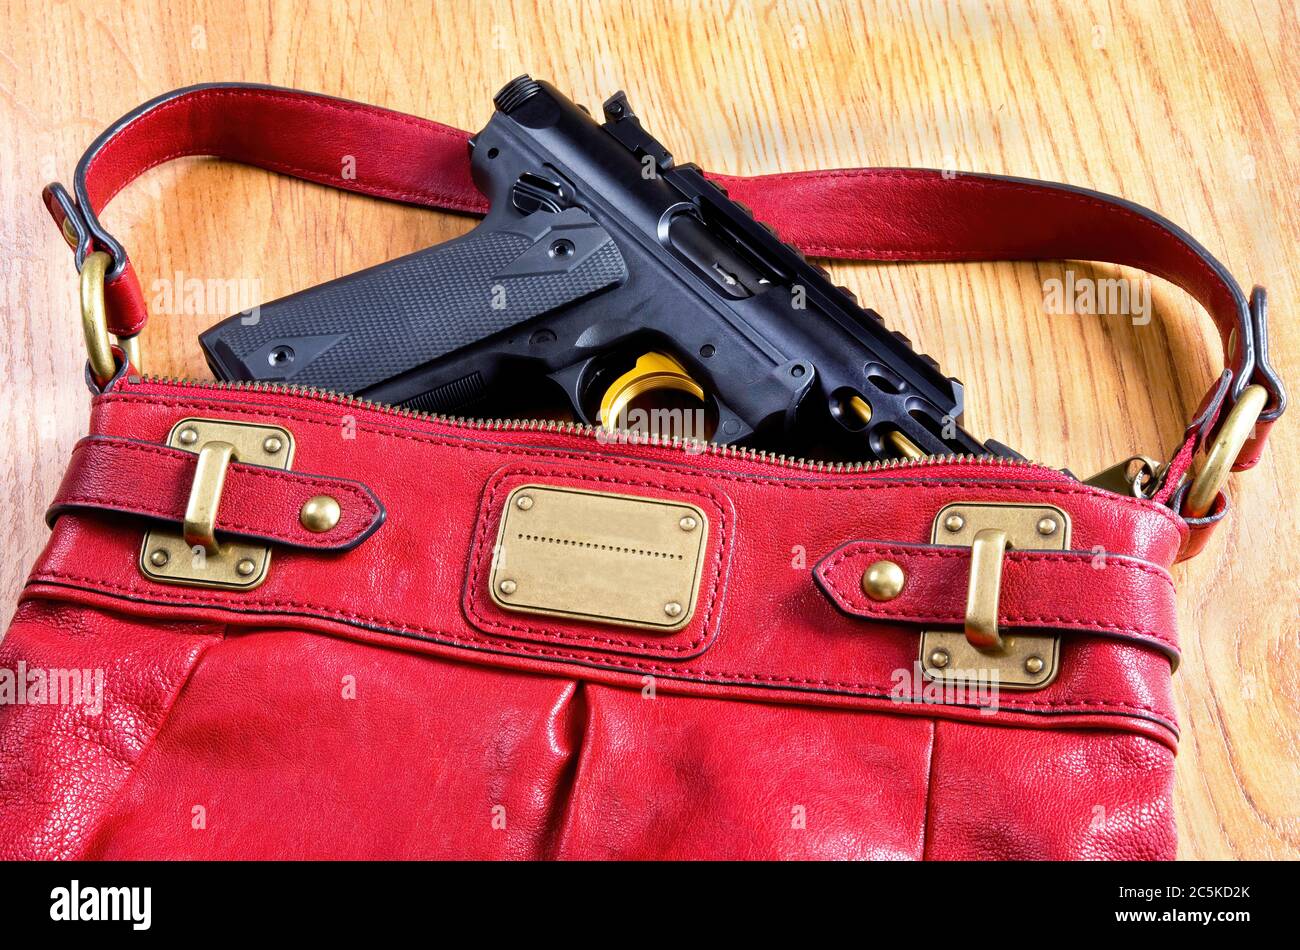 Ladies handbag packing pistol for self defense. Stock Photo